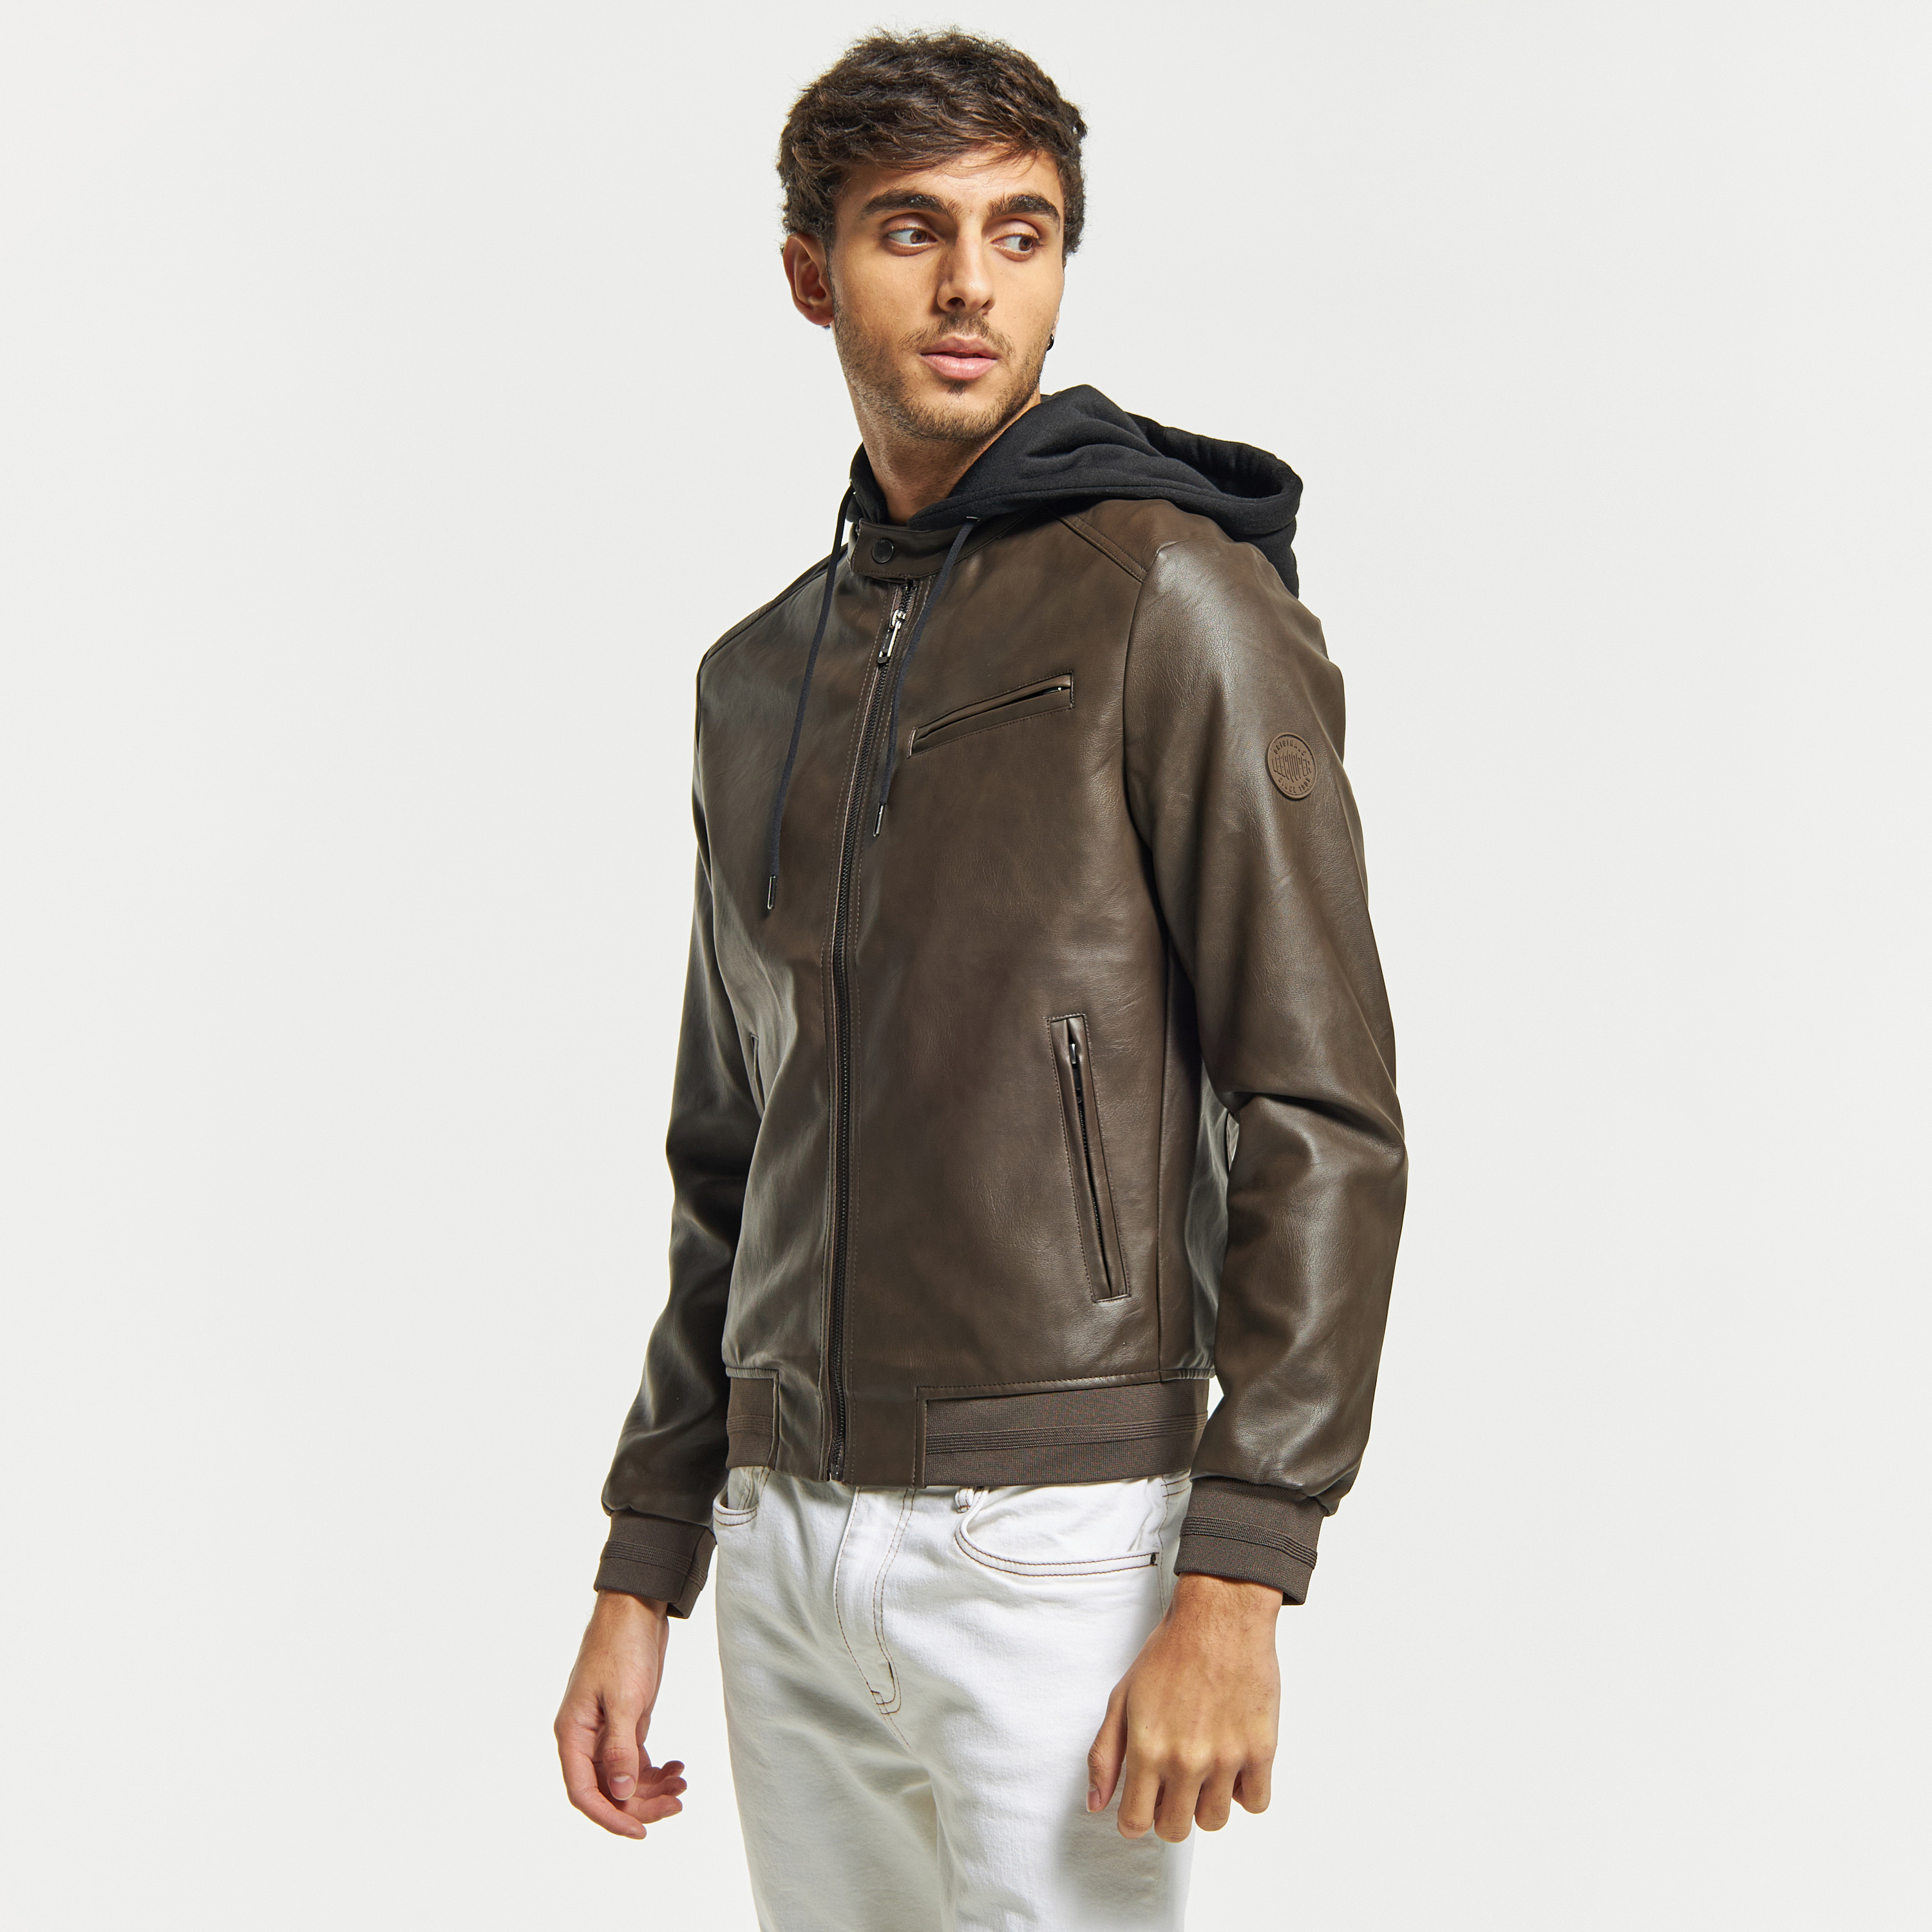 Man Jacket Lee Cooper Keyven 100% Cotton SIZE S Black New | eBay